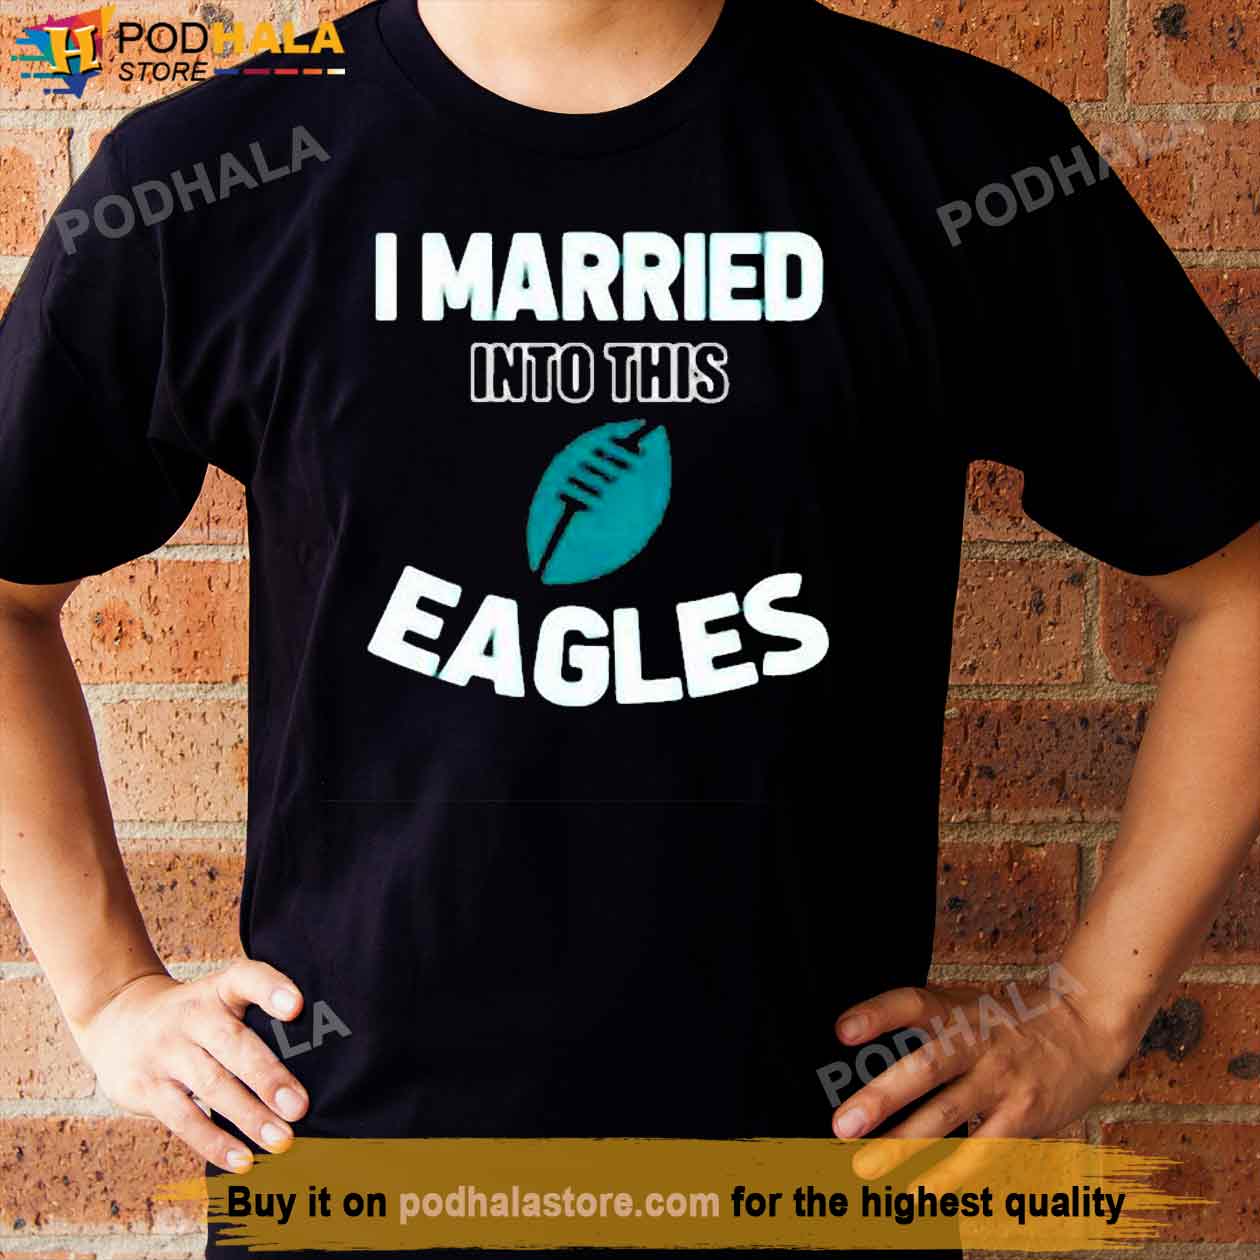 funny philadelphia eagles shirts